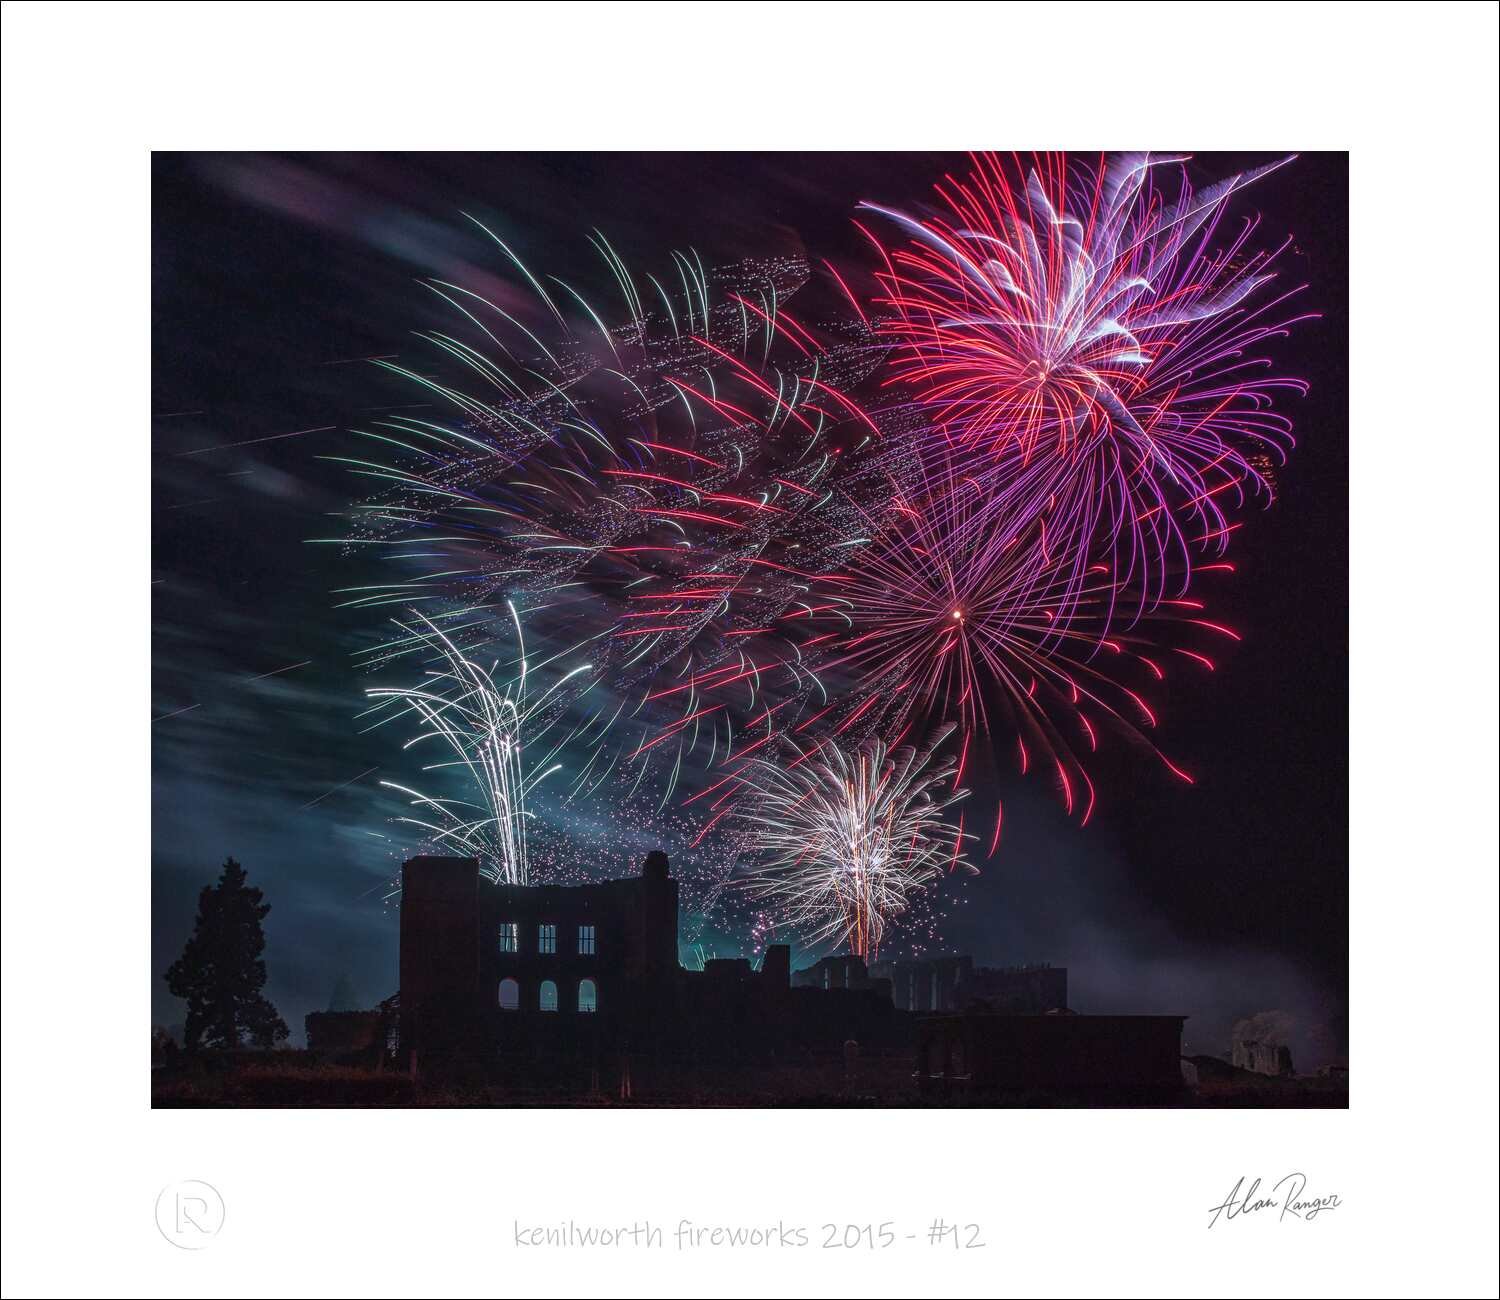 kenilworth fireworks 2015 - #12.jpg